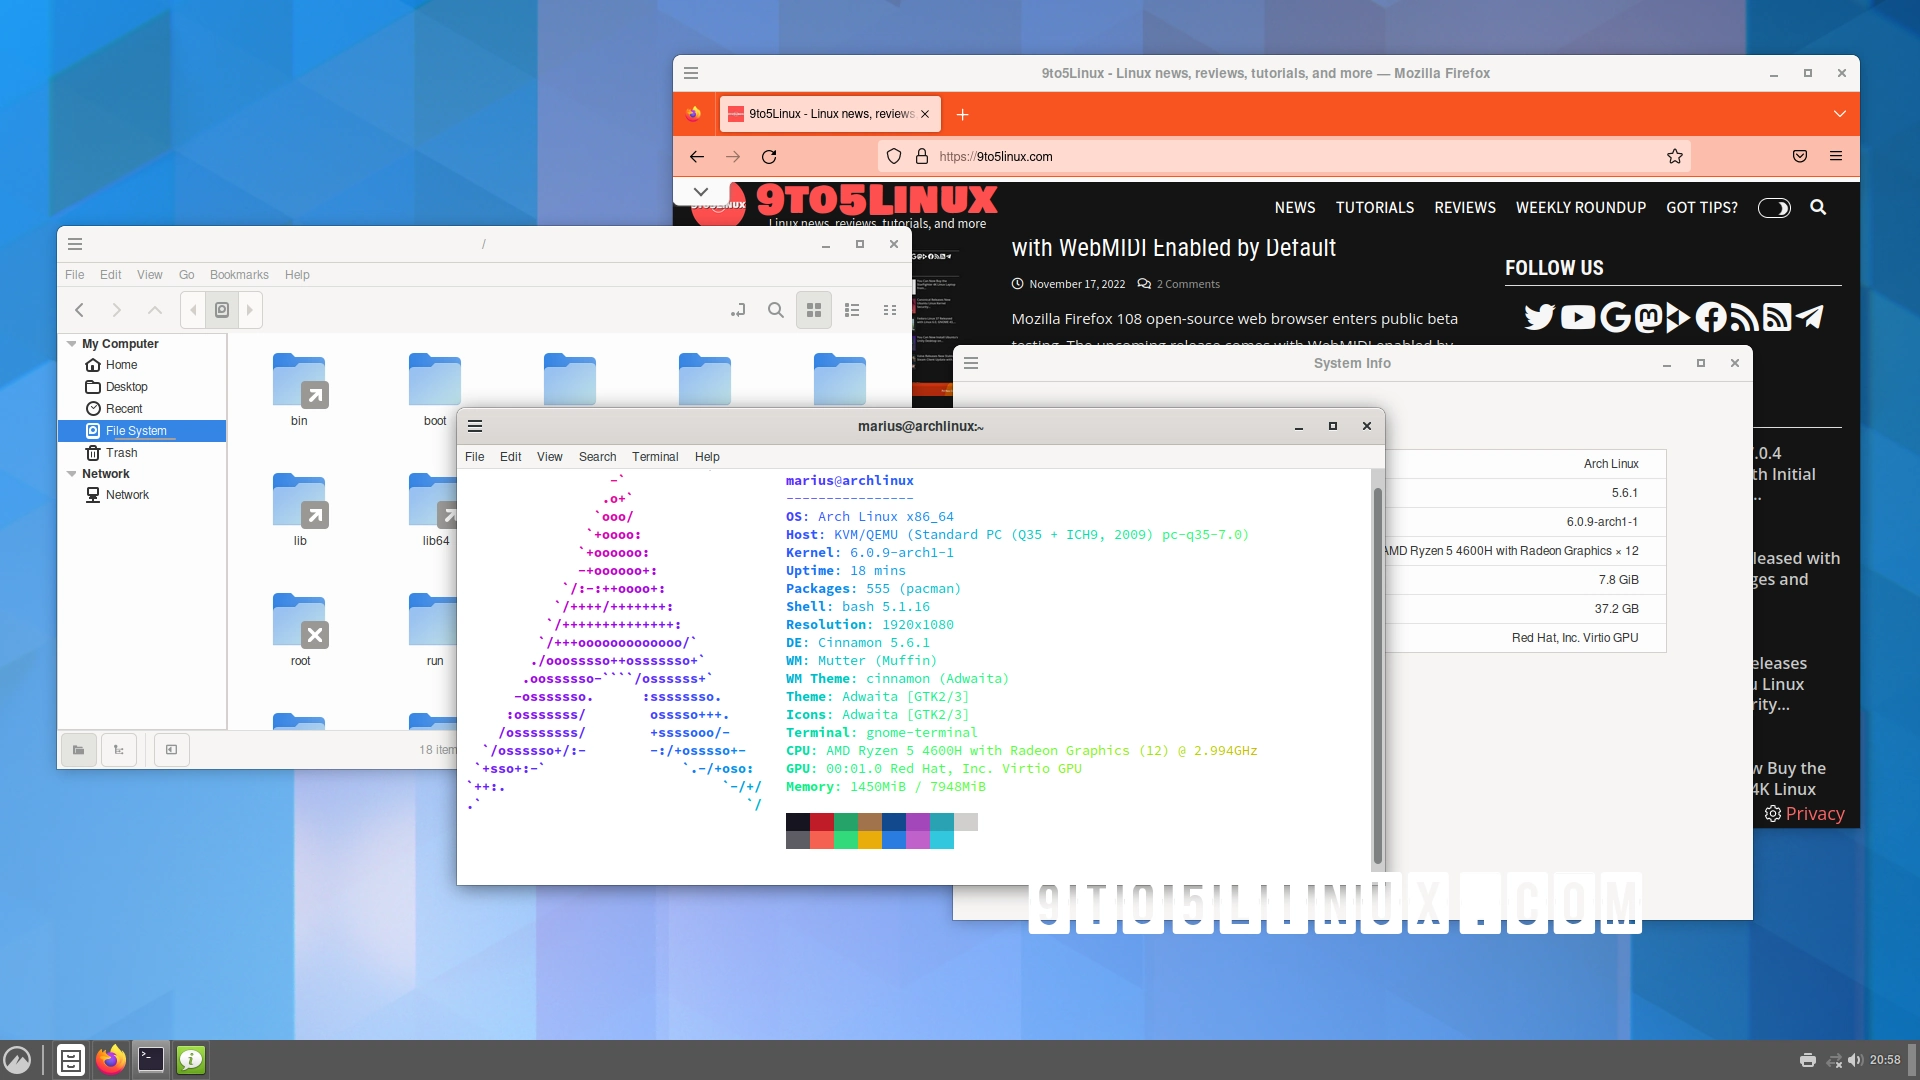 First Look at the Cinnamon 5.6 Desktop Environment